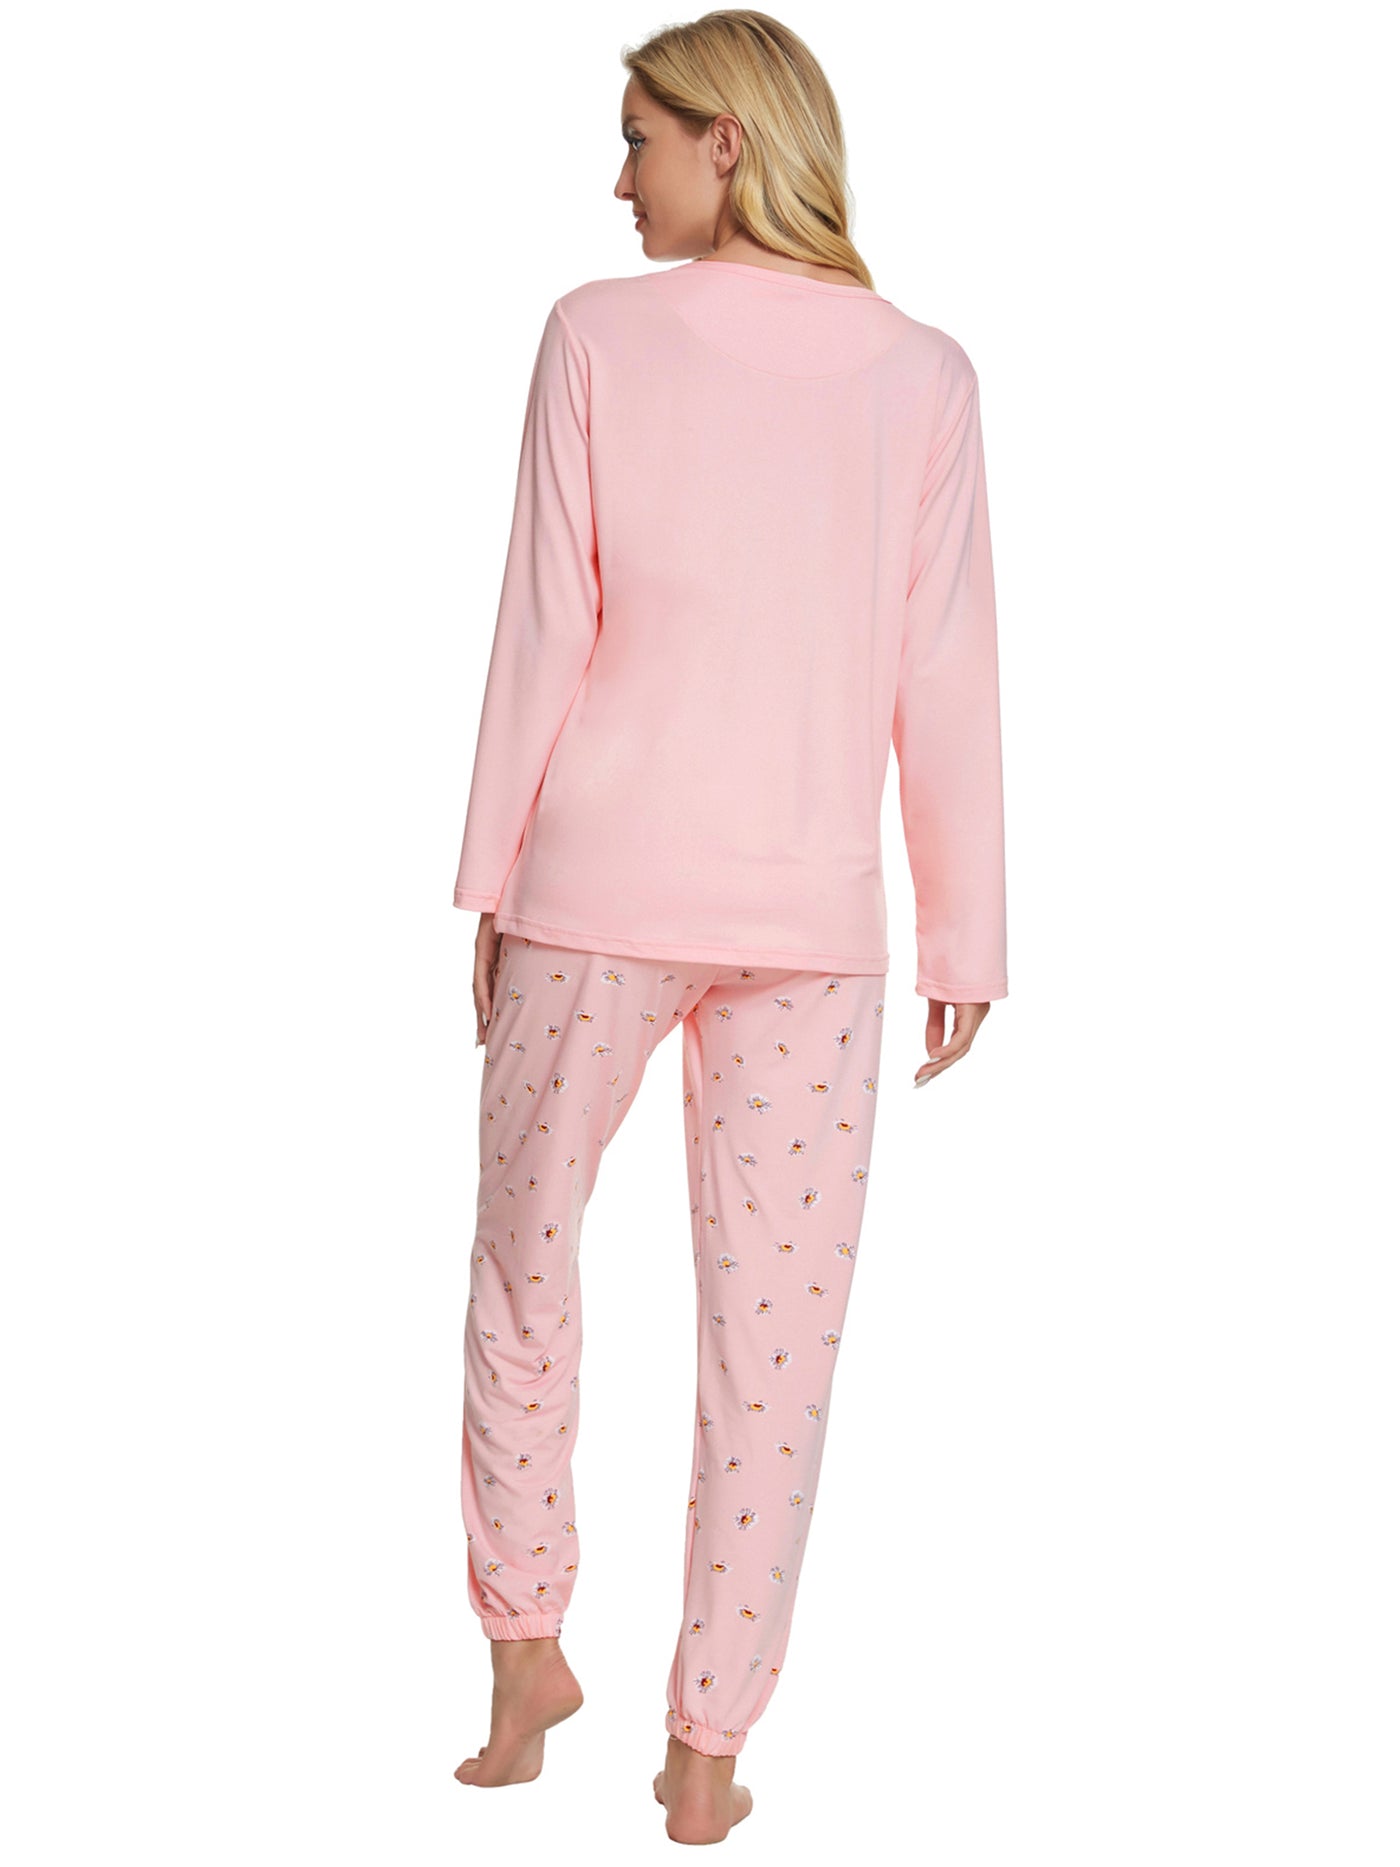 Bublédon Sleepwear Lounge Cute Print Pants Long Sleeve Pajama Set